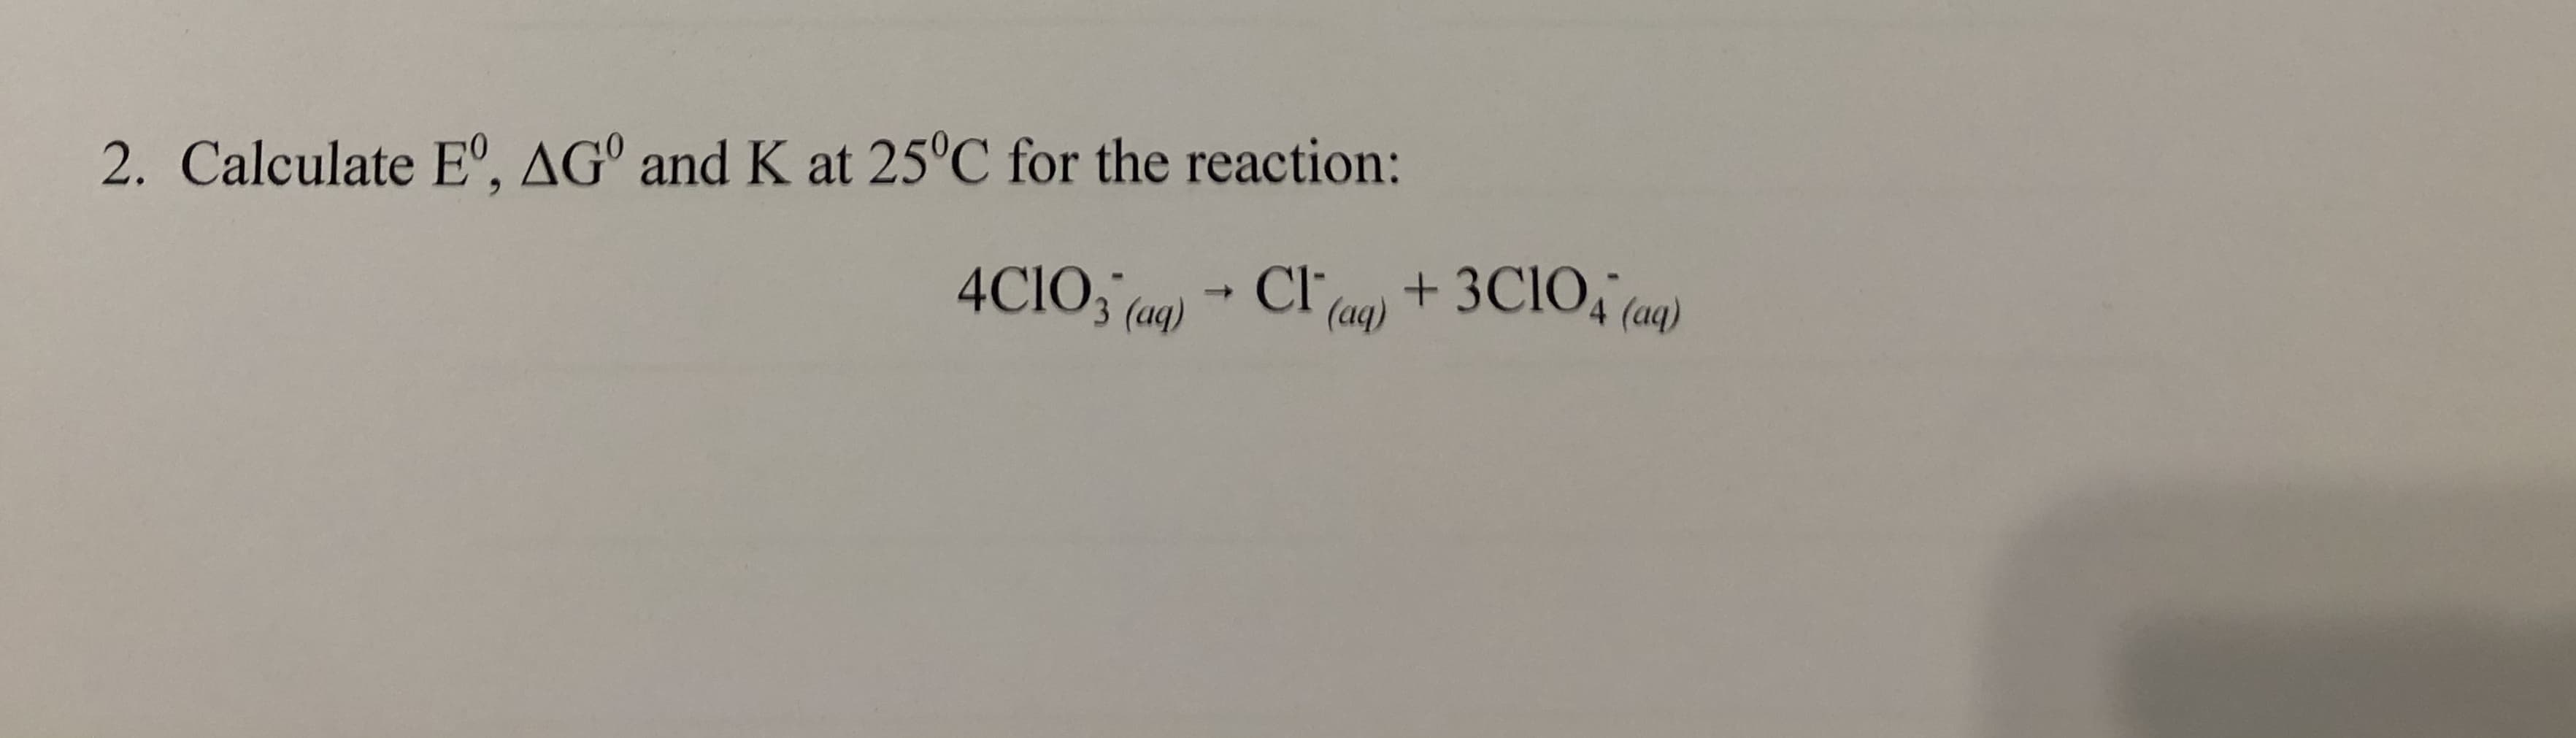 2. Calculate E°, AGº and K at 25°C for the reaction:
4CIO, (aq) Cl (ag) + 3CIO, (aq)
